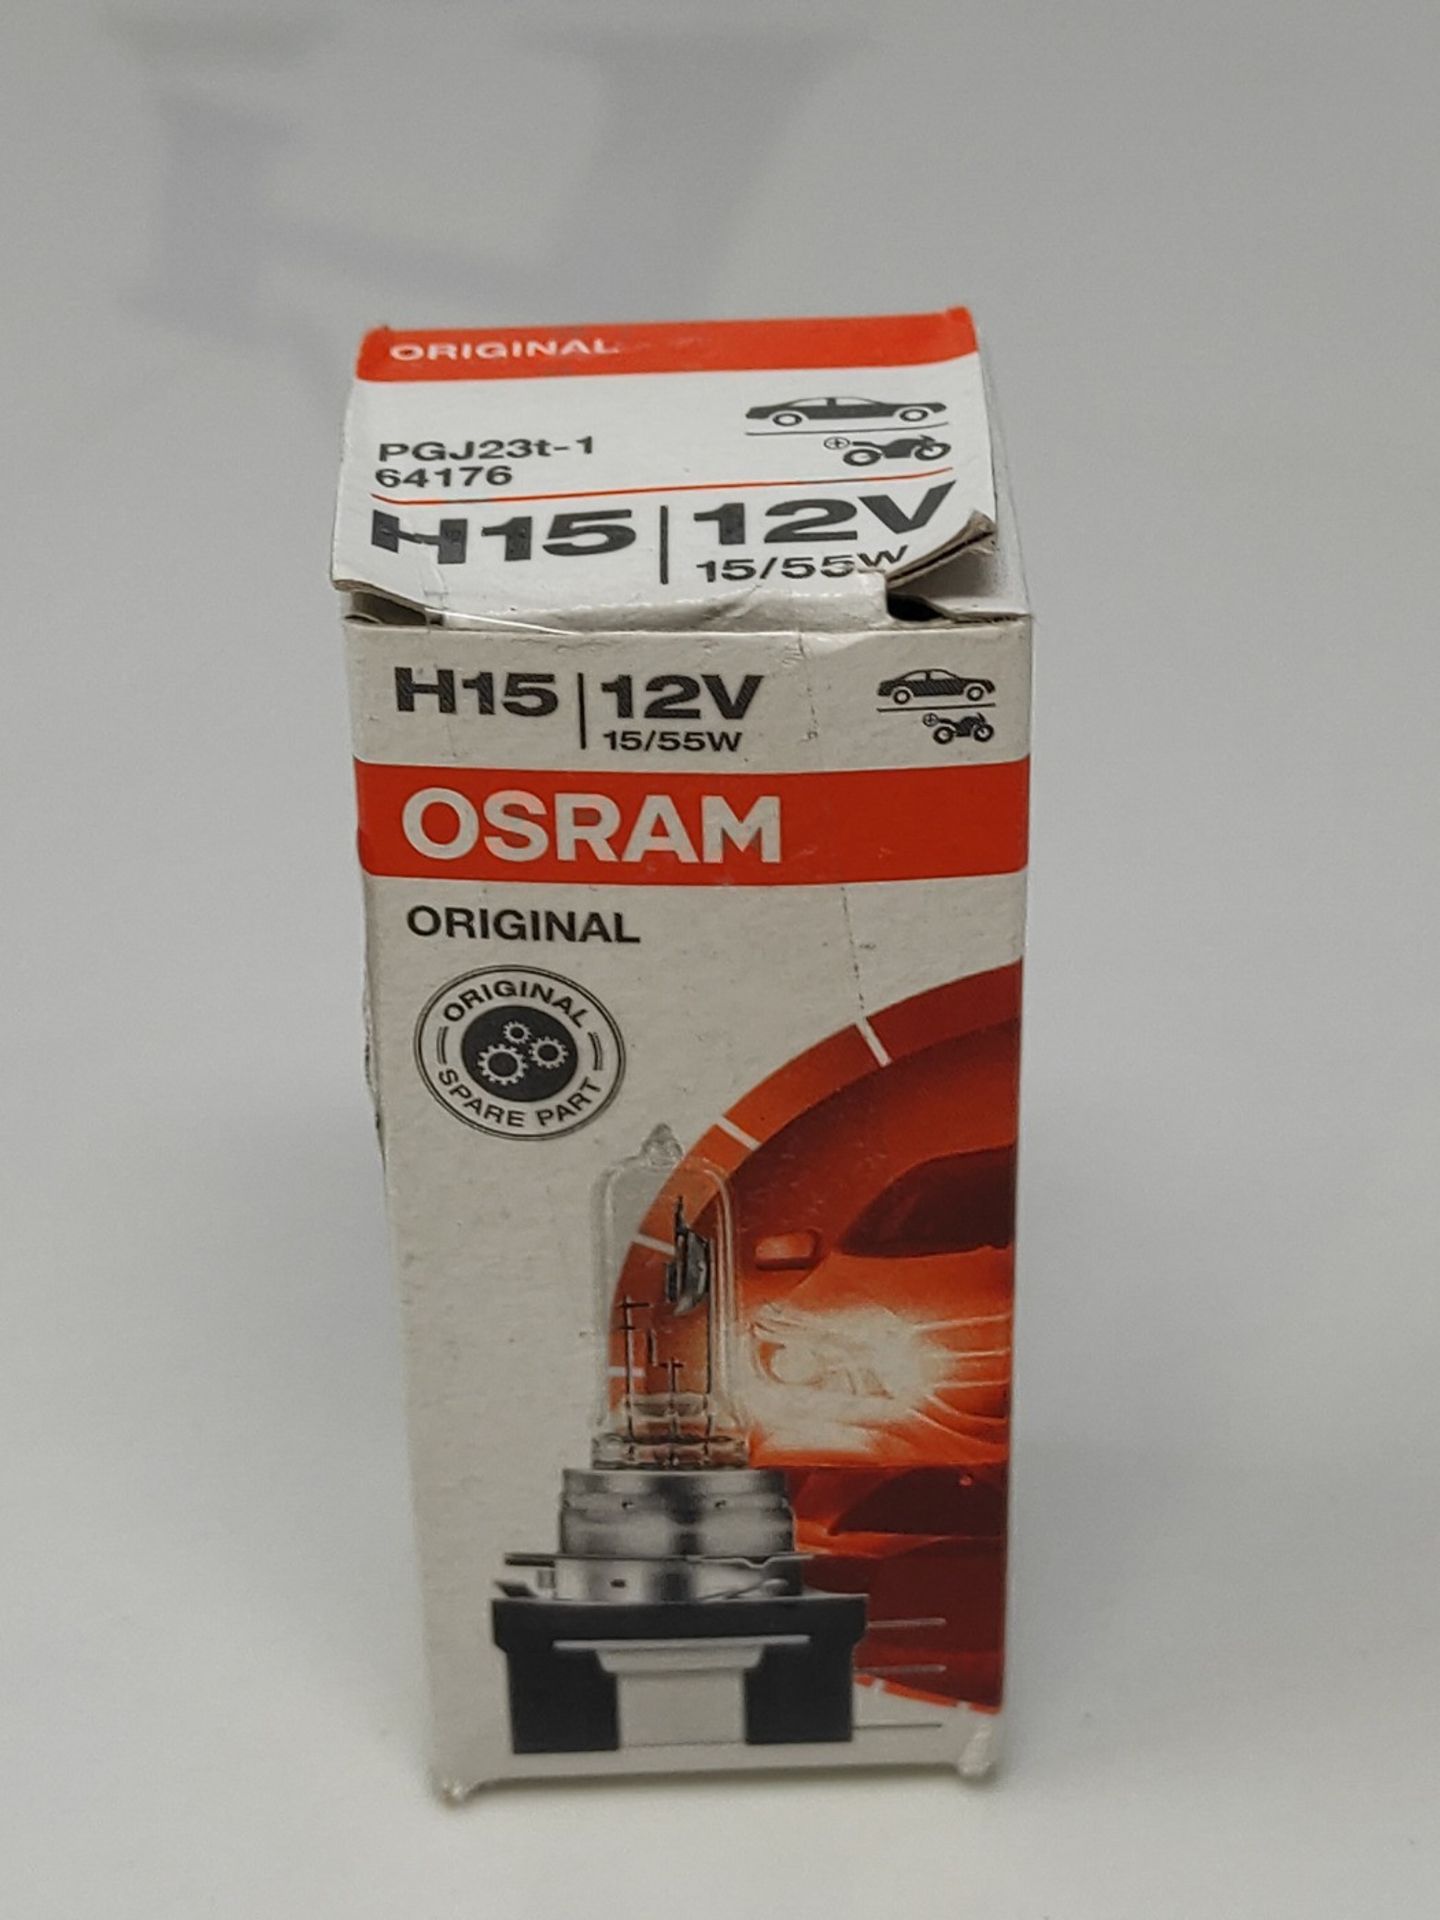 OSRAM Original 12V H15 halogen headlamp bulb 64176 1 piece in box - Image 2 of 2